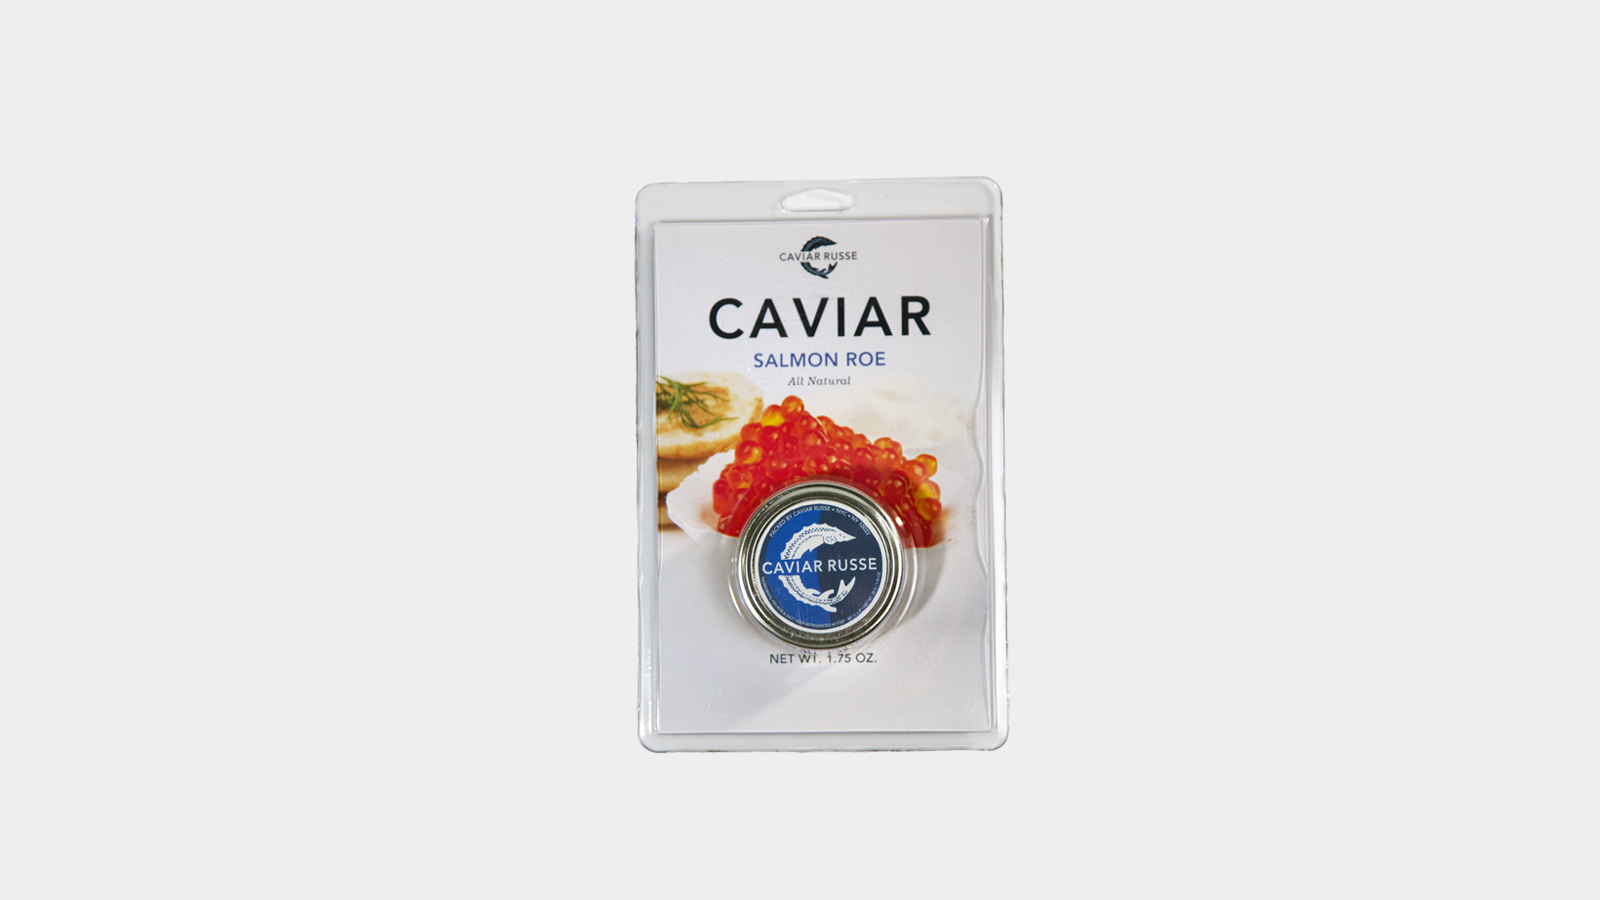 Caviar Russe Pacific Salmon Roe